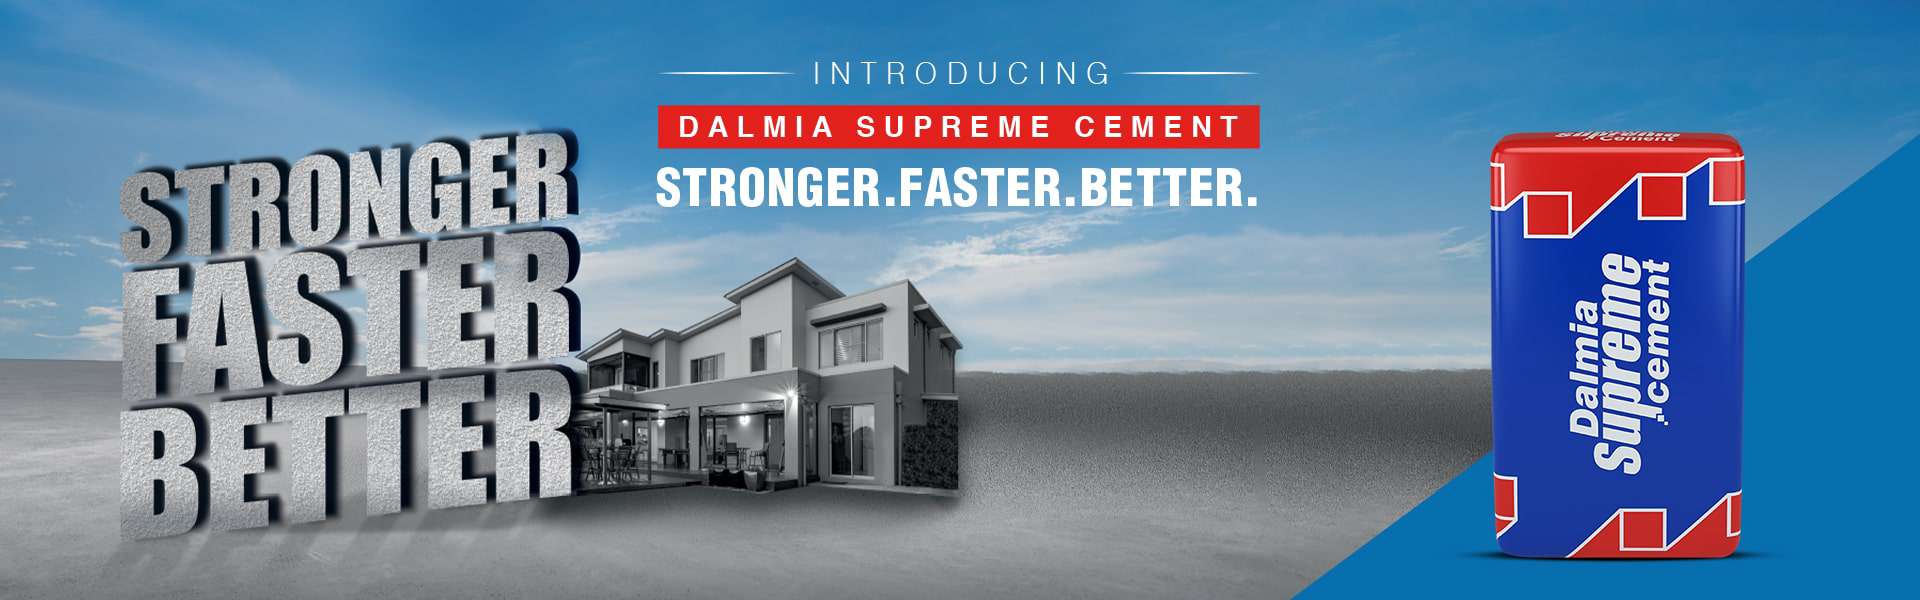 Buy Dalmia Cement - Happy Offer